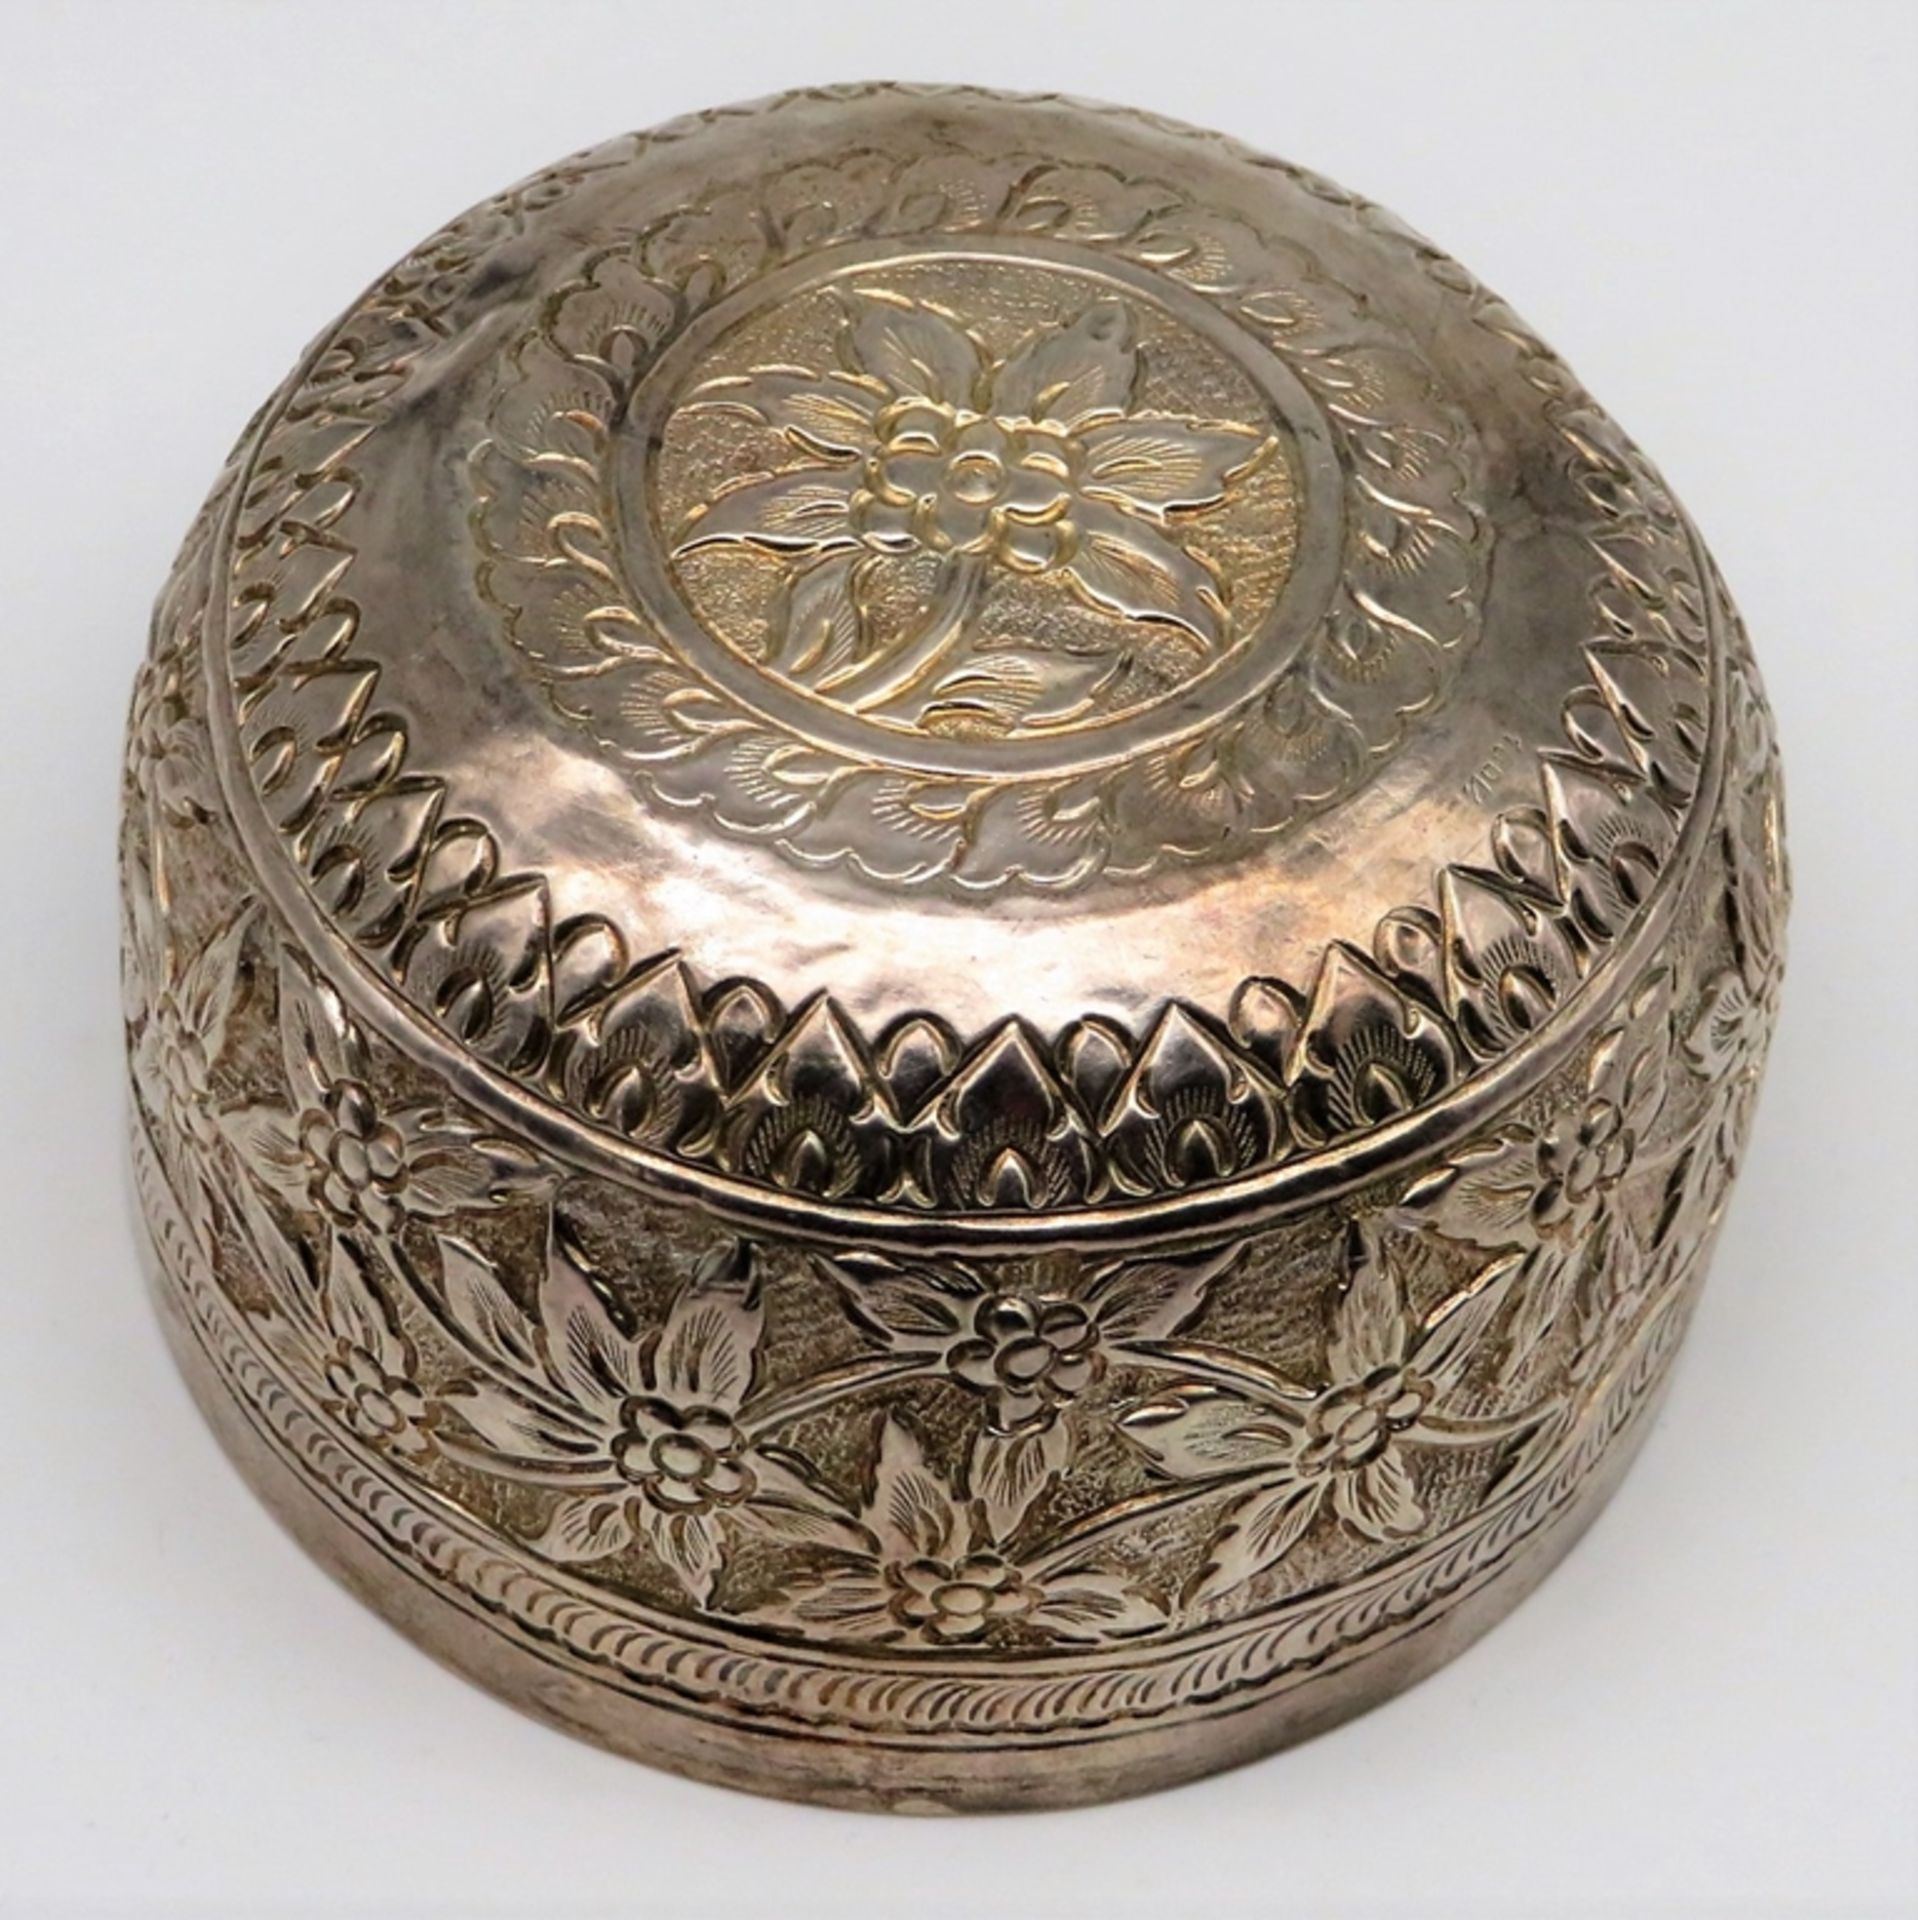 Schale, Indien, 19. Jahrhundert, 800er Silber, handgetrieben, 75 g, h 5,5 cm, d 9 cm. - Image 2 of 2